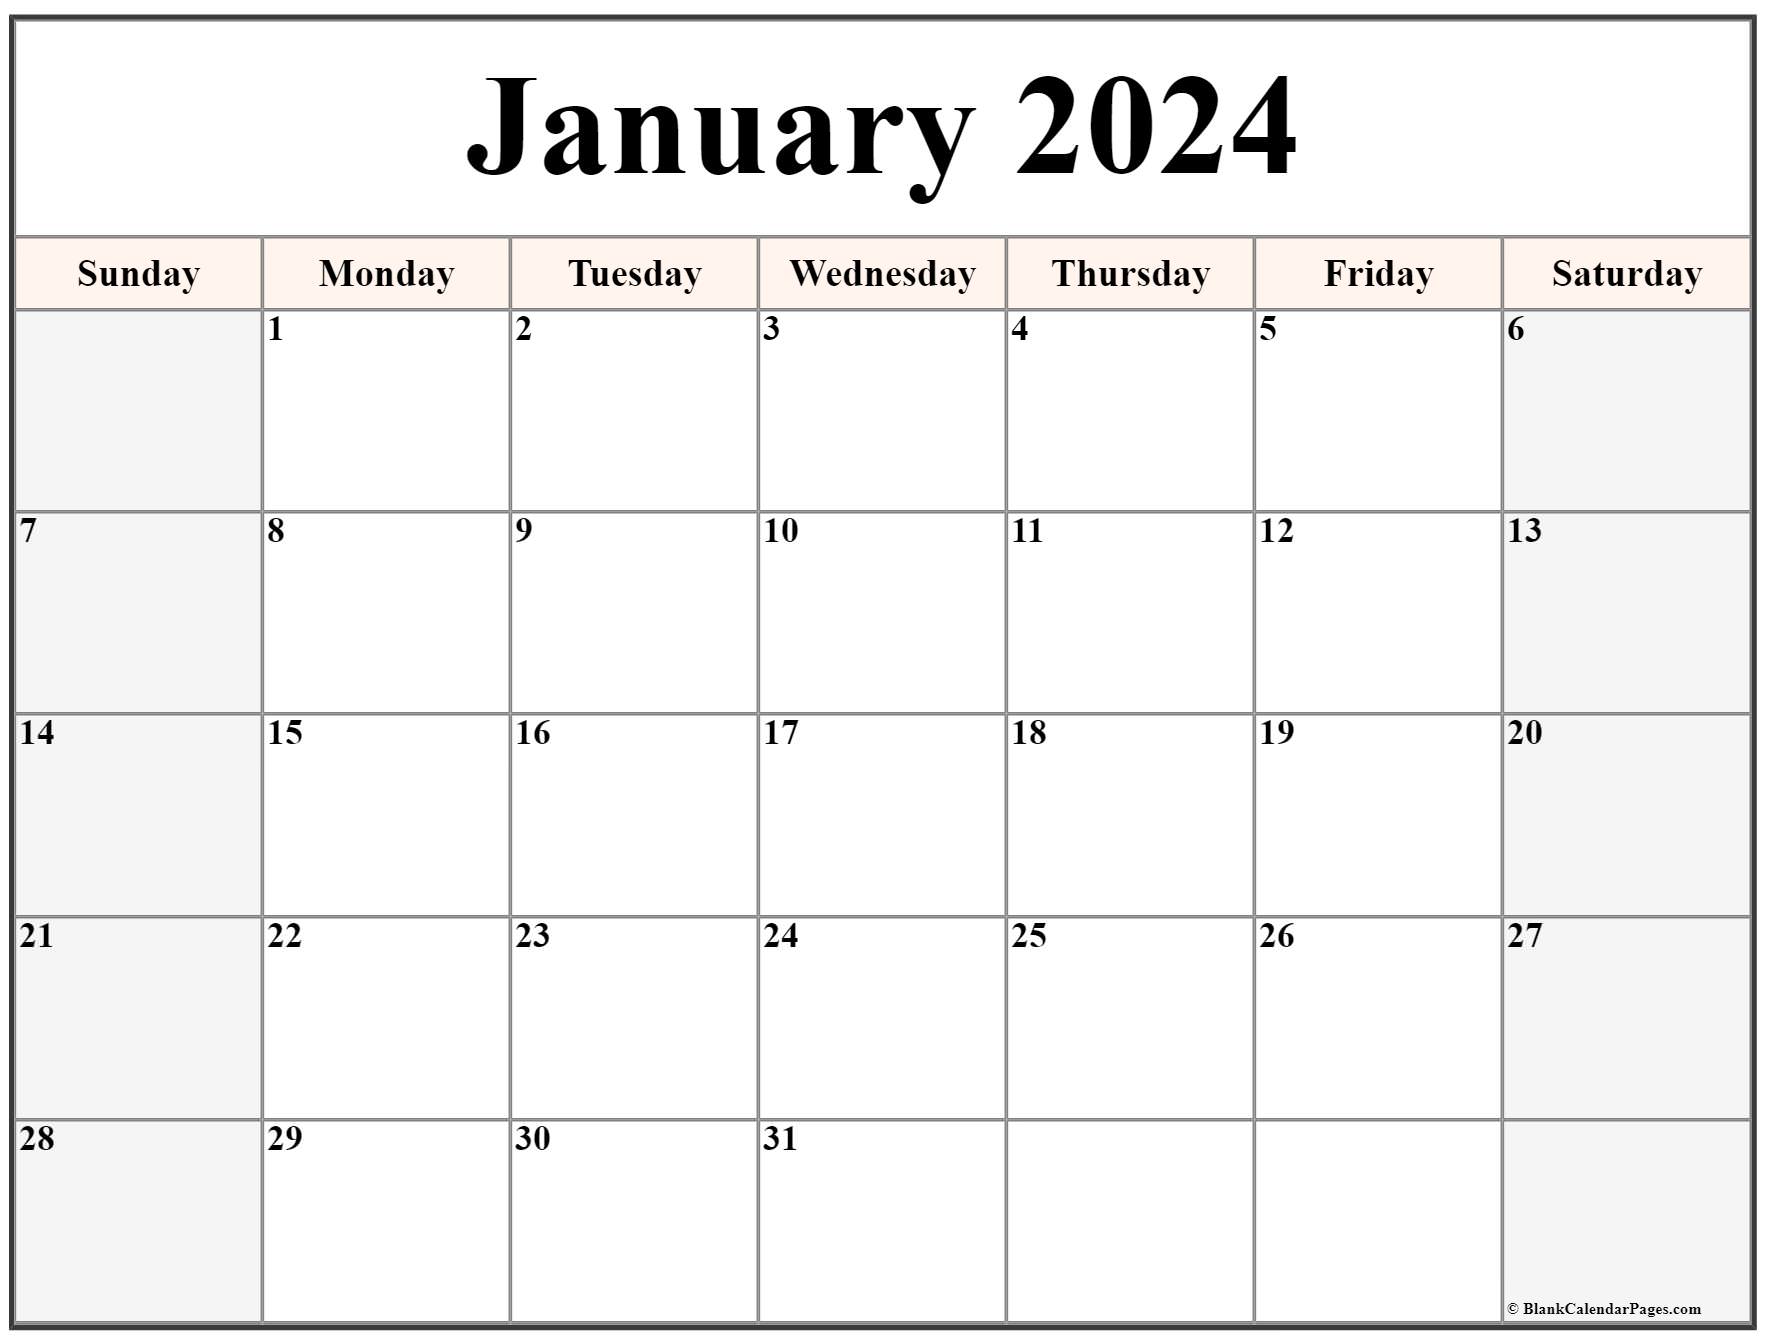 January 2024 Calendar Hd New Awasome Review of Calendar January 2024